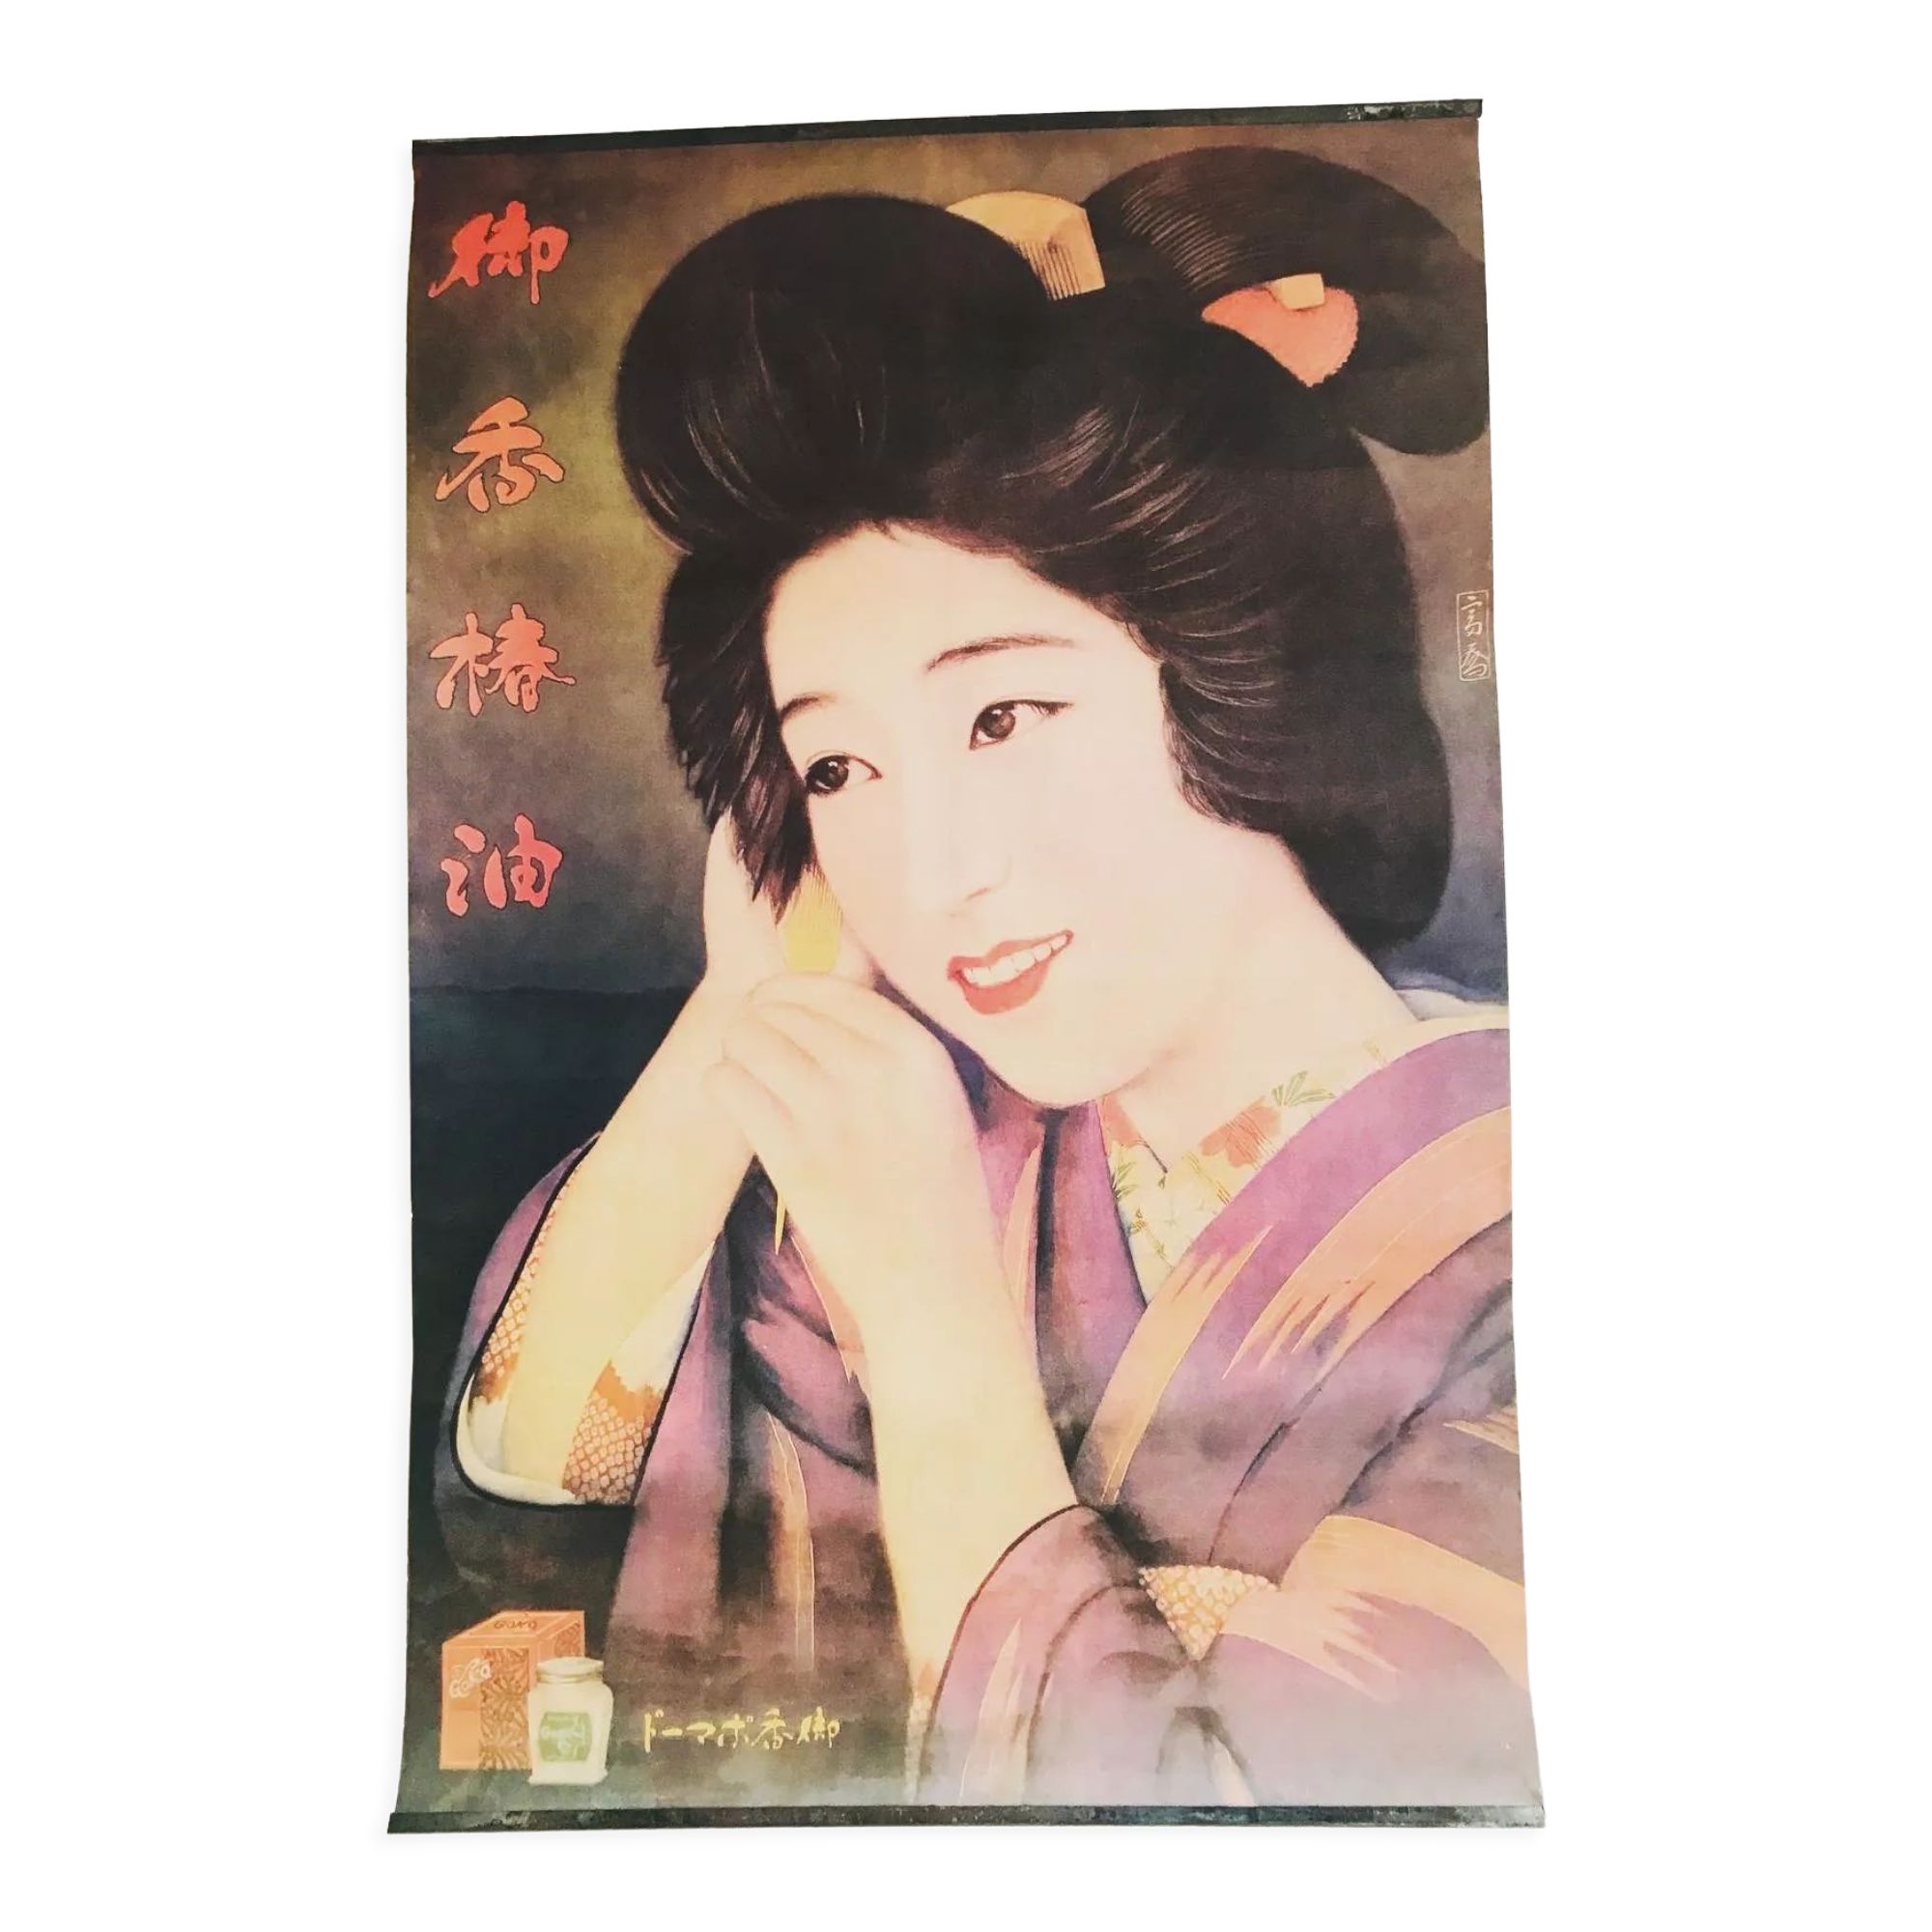 Affiche ancienne publicitaire chinoise multicolore